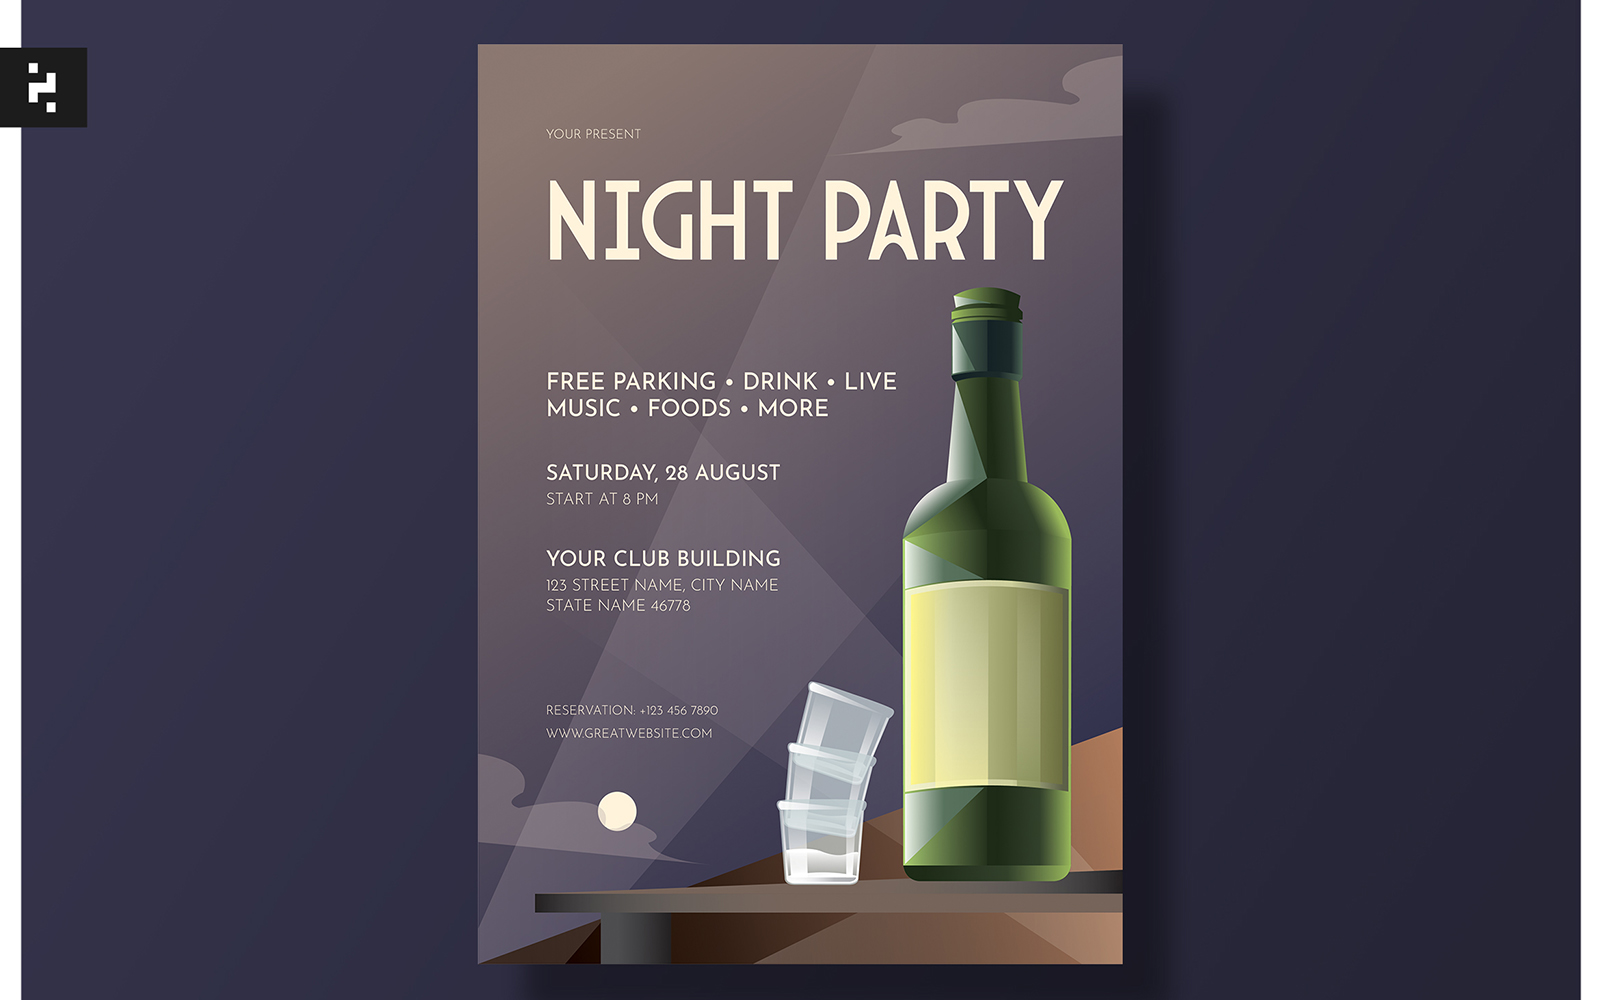 Night Party Flyer - Art Deco Theme